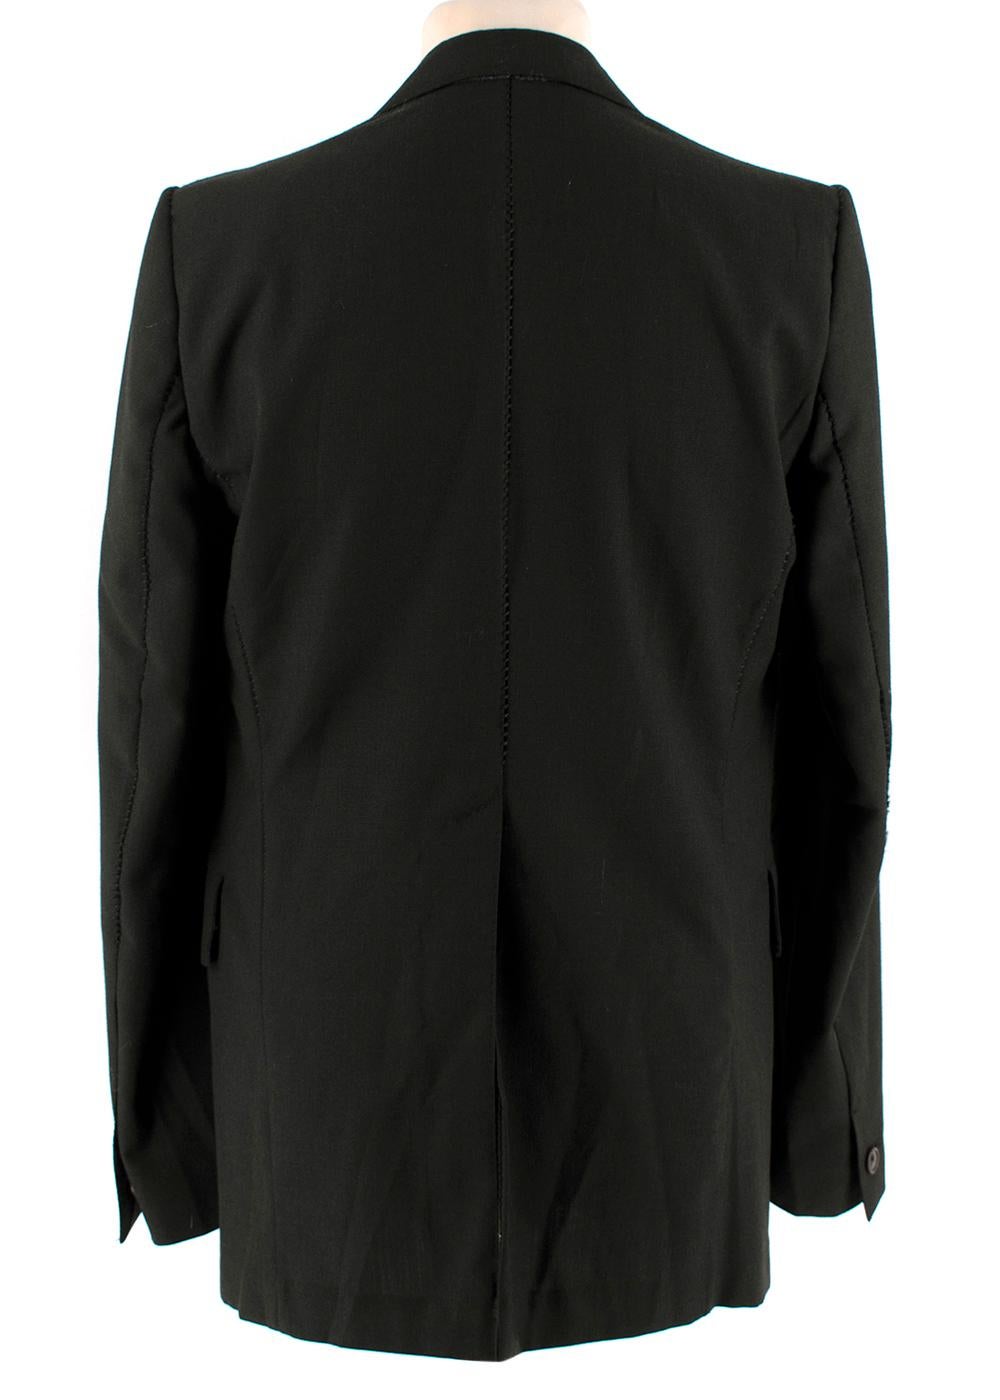 Black Carol Christian Poell Green Single Breasted Jacket - Size L EU50